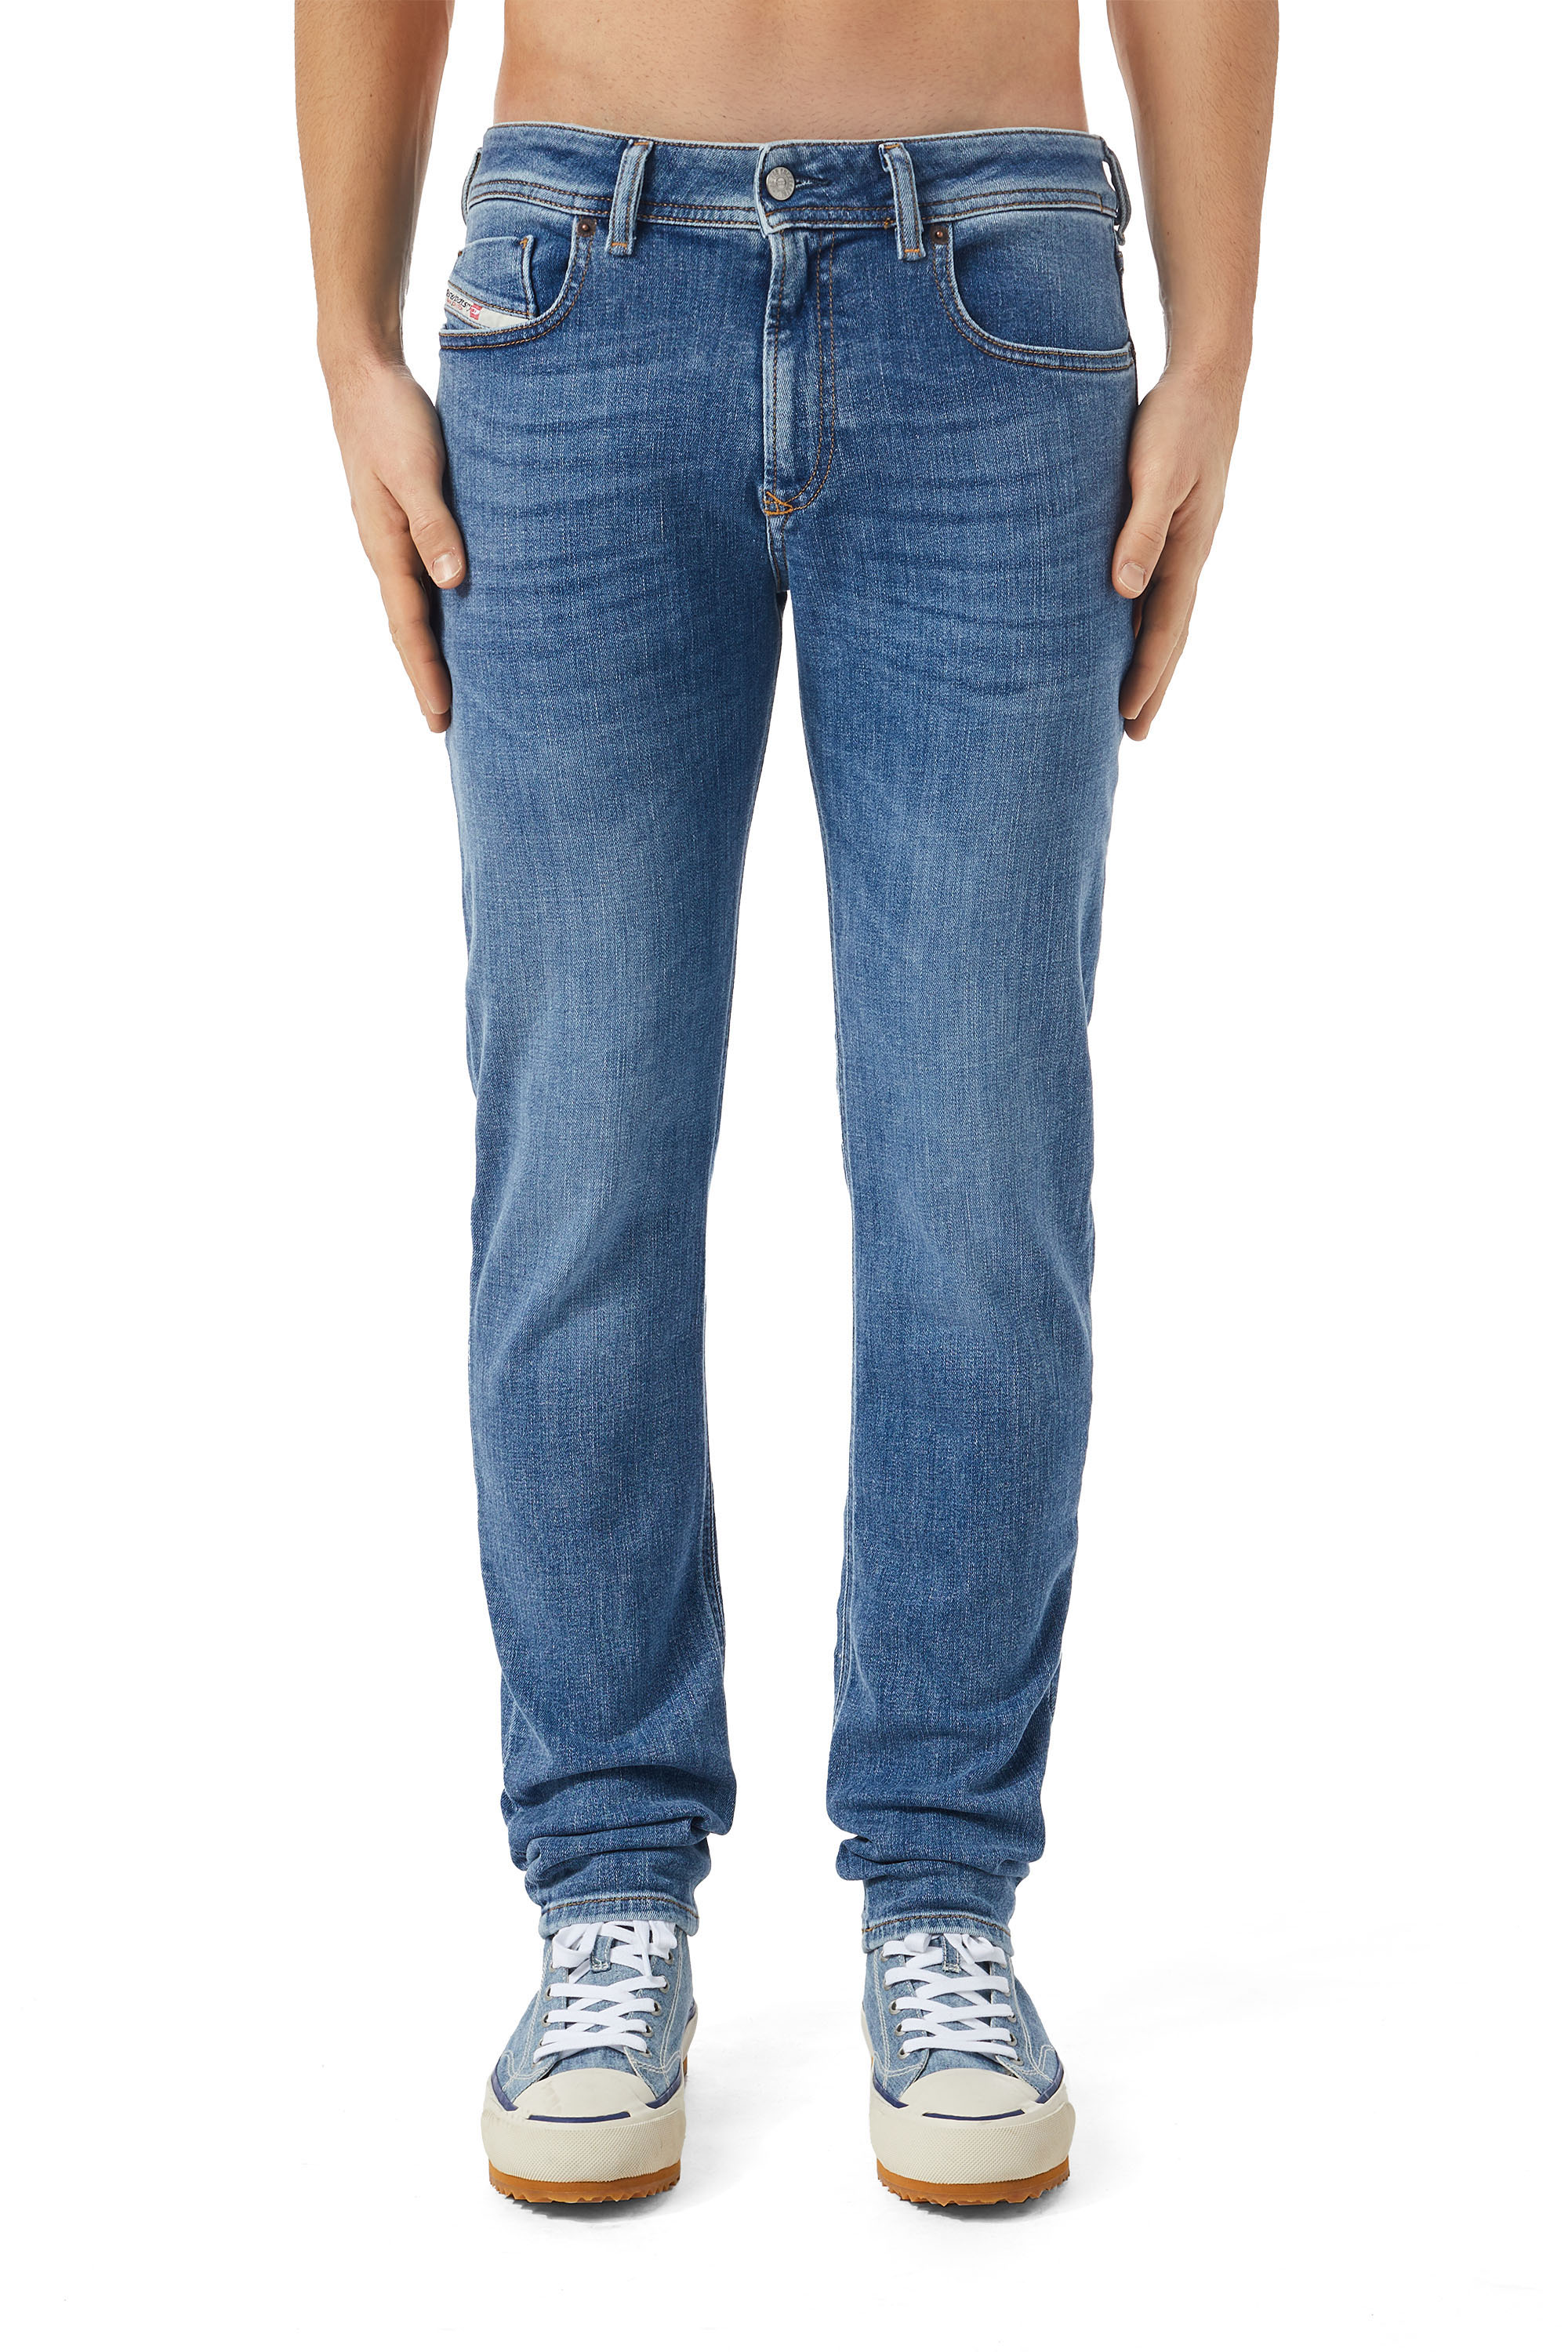 1979 SLEENKER 09C01 Skinny Jeans, Mittelblau - Jeans